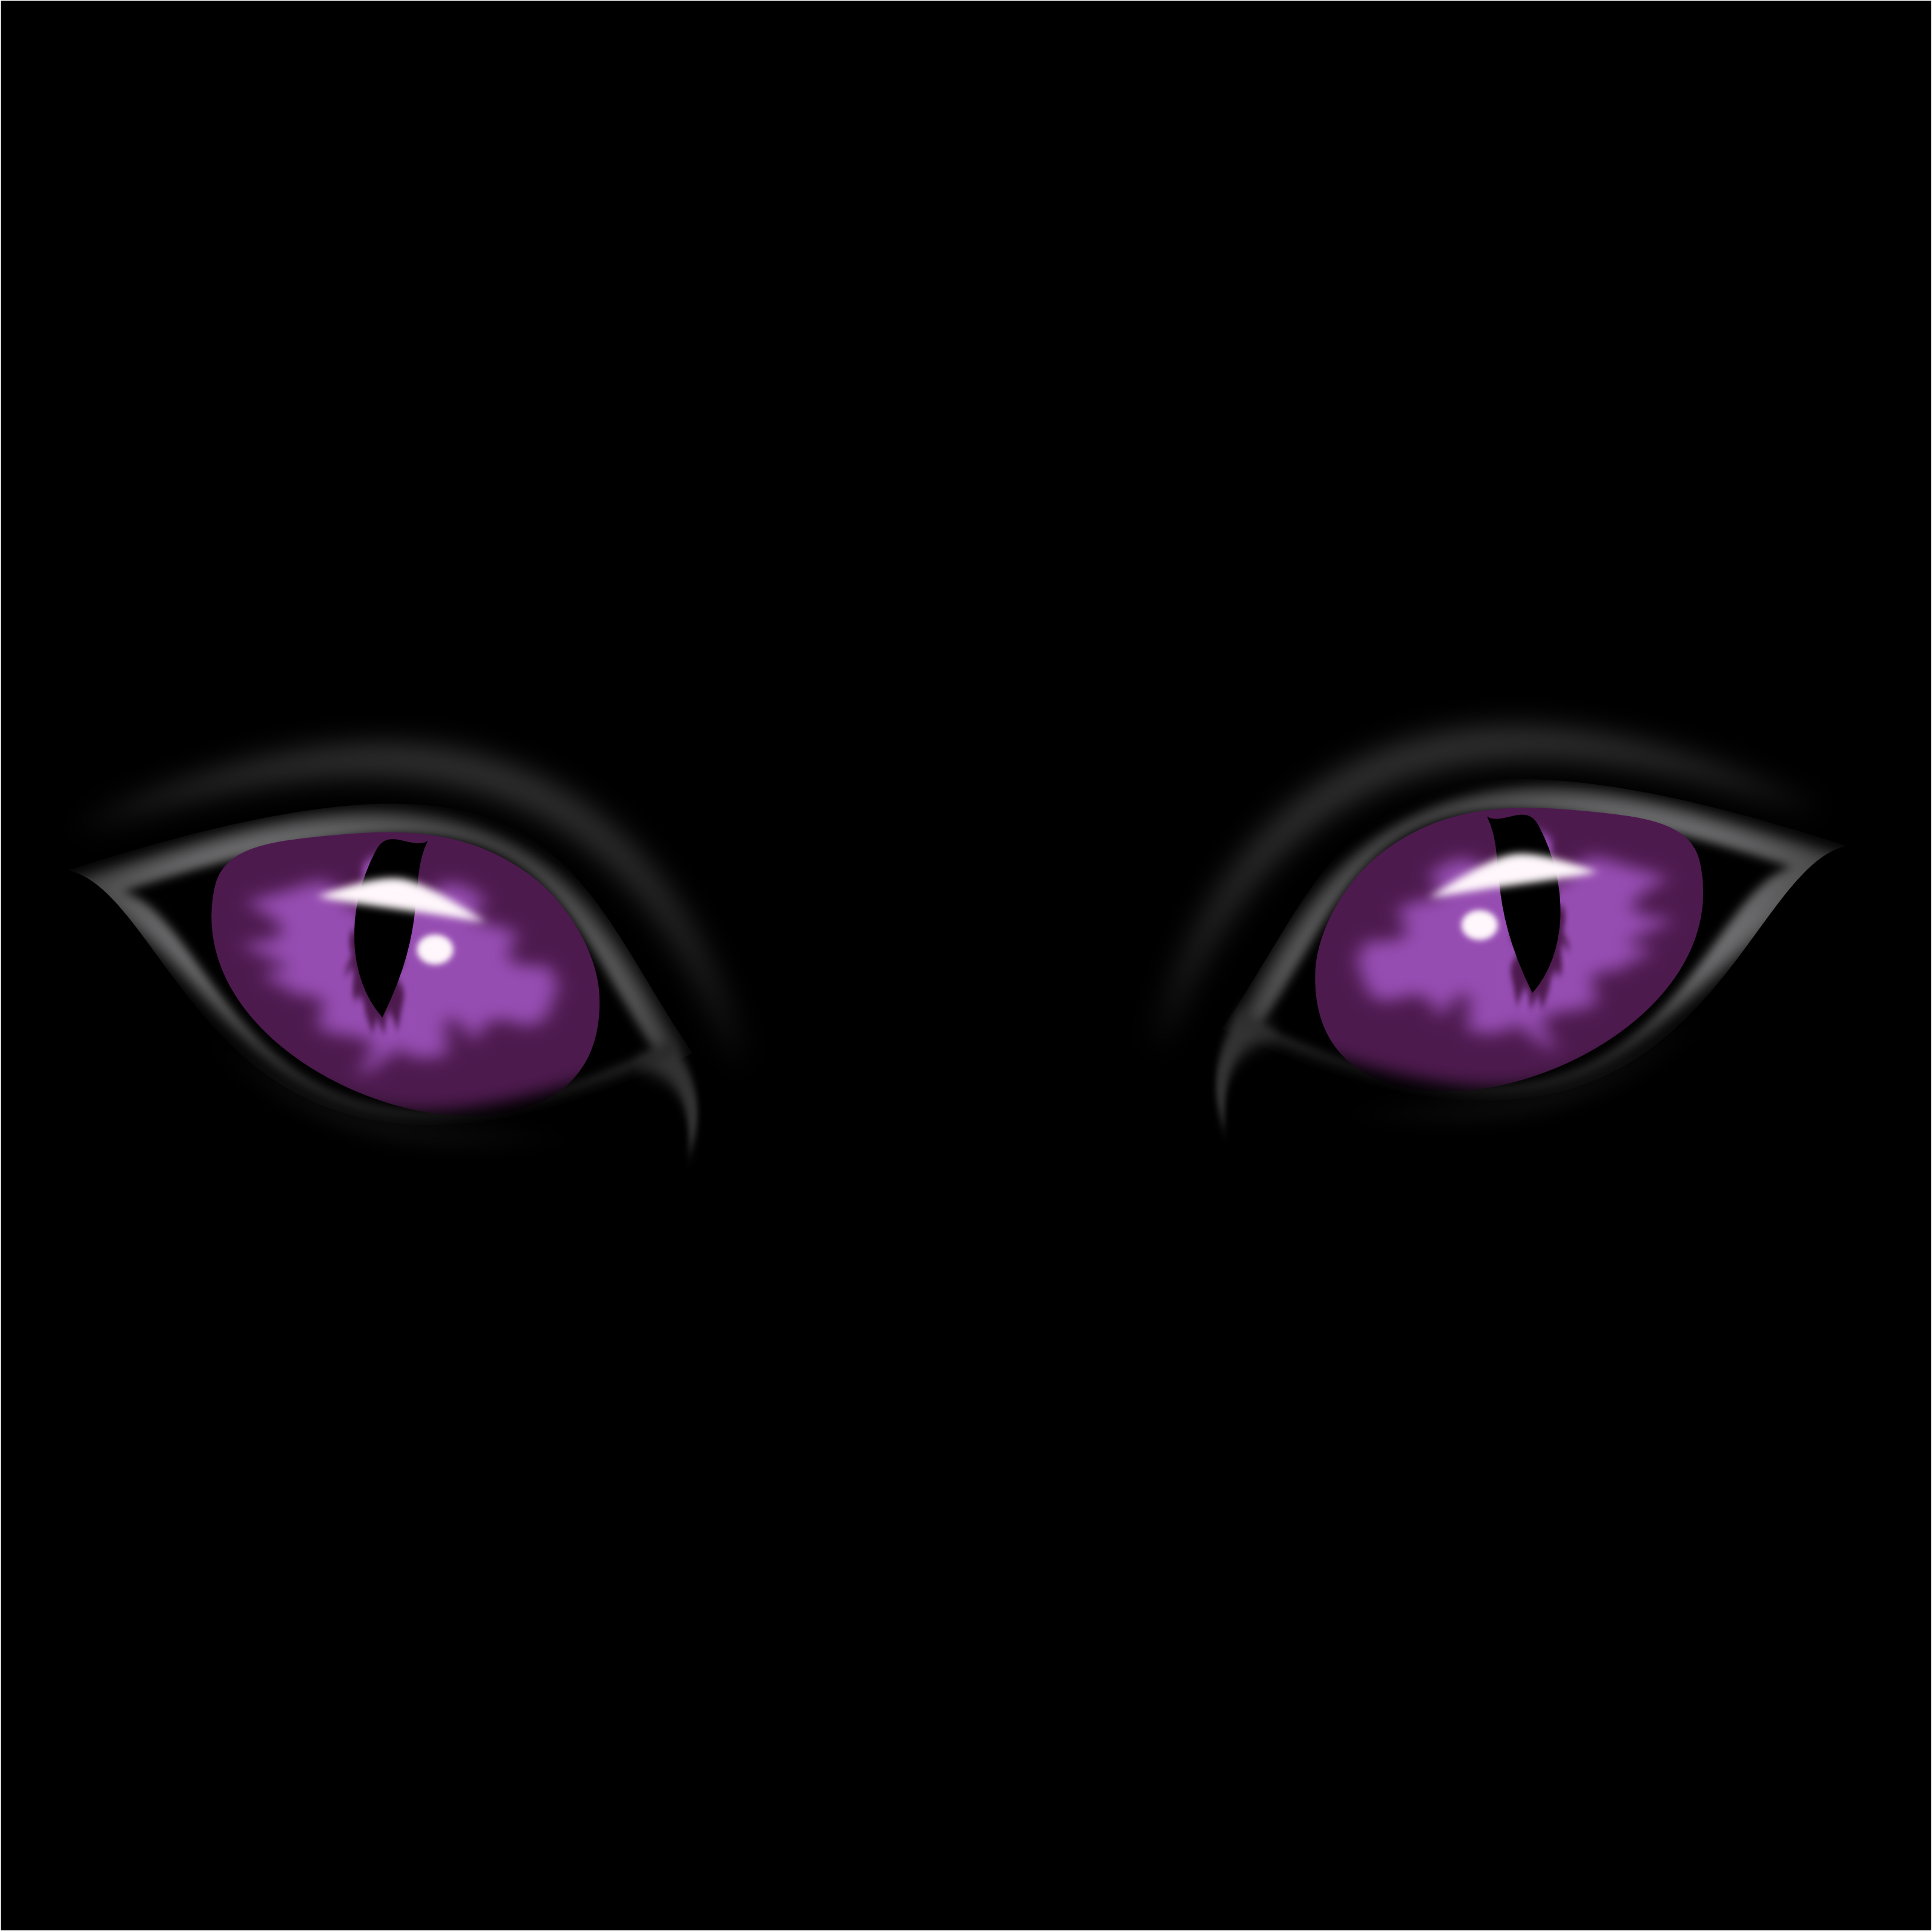 Purple Eyes clipart #4, Download drawings